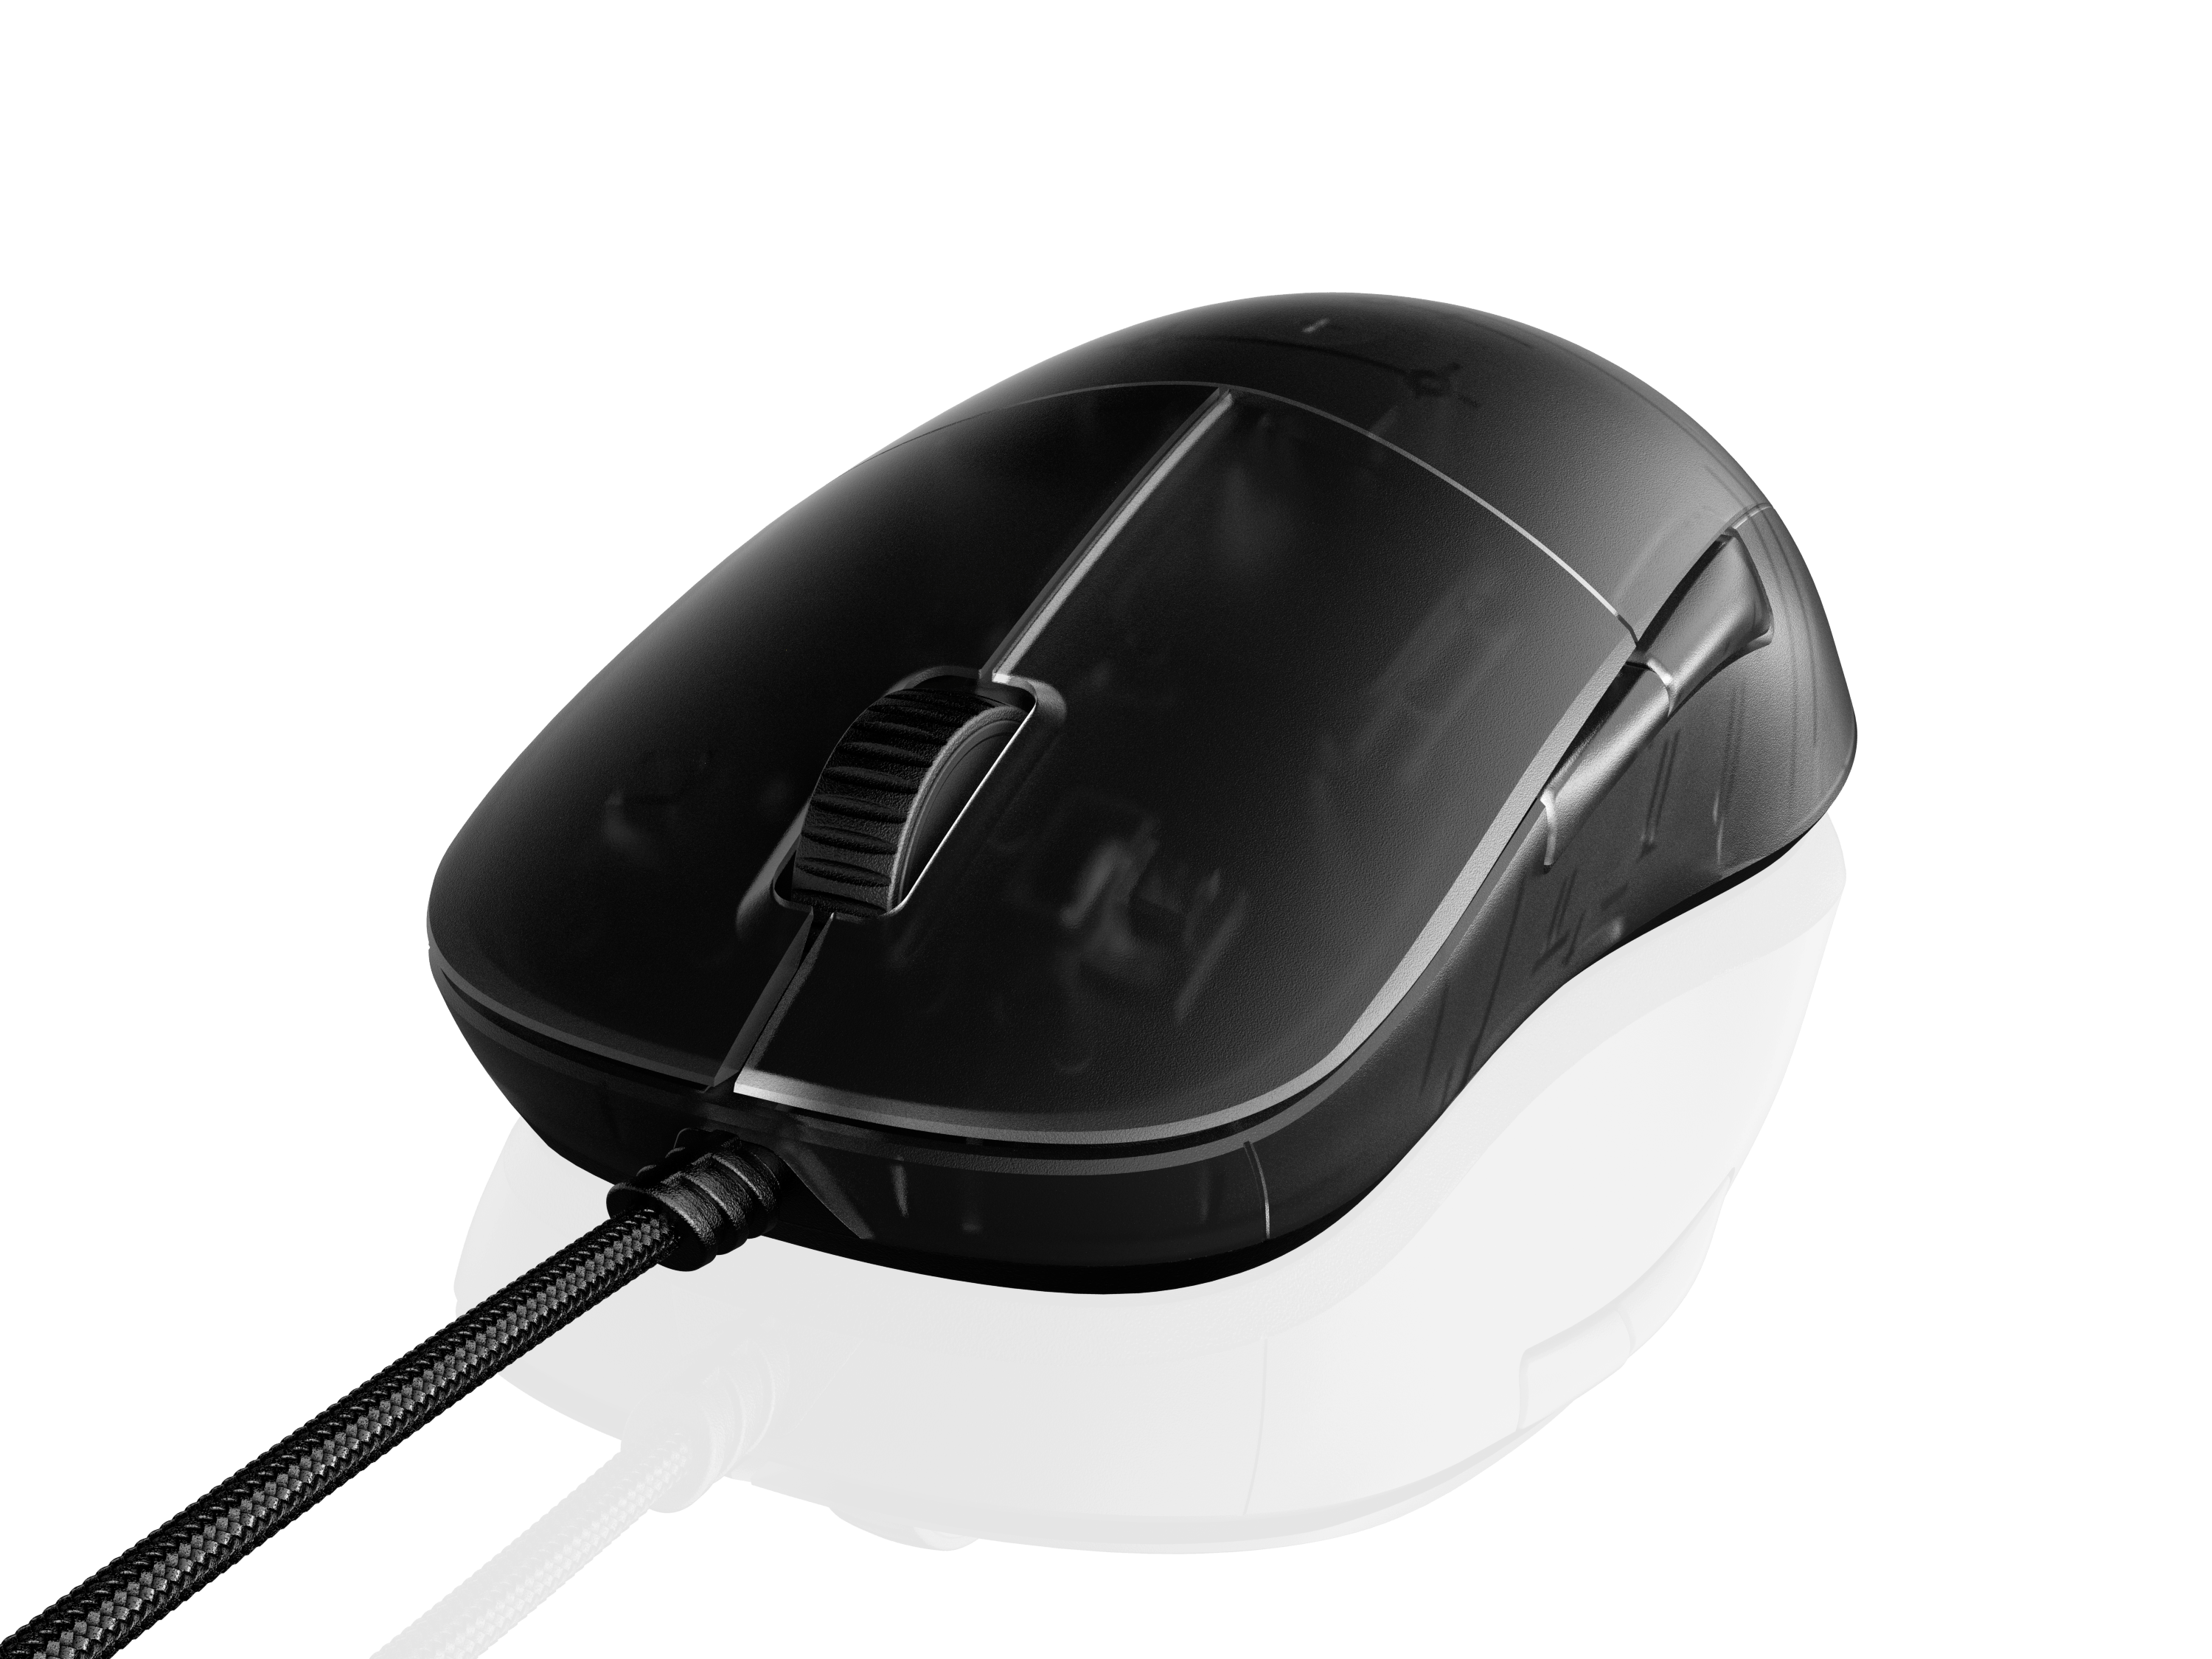 Xm1r Gaming Mouse Black Endgame Gear